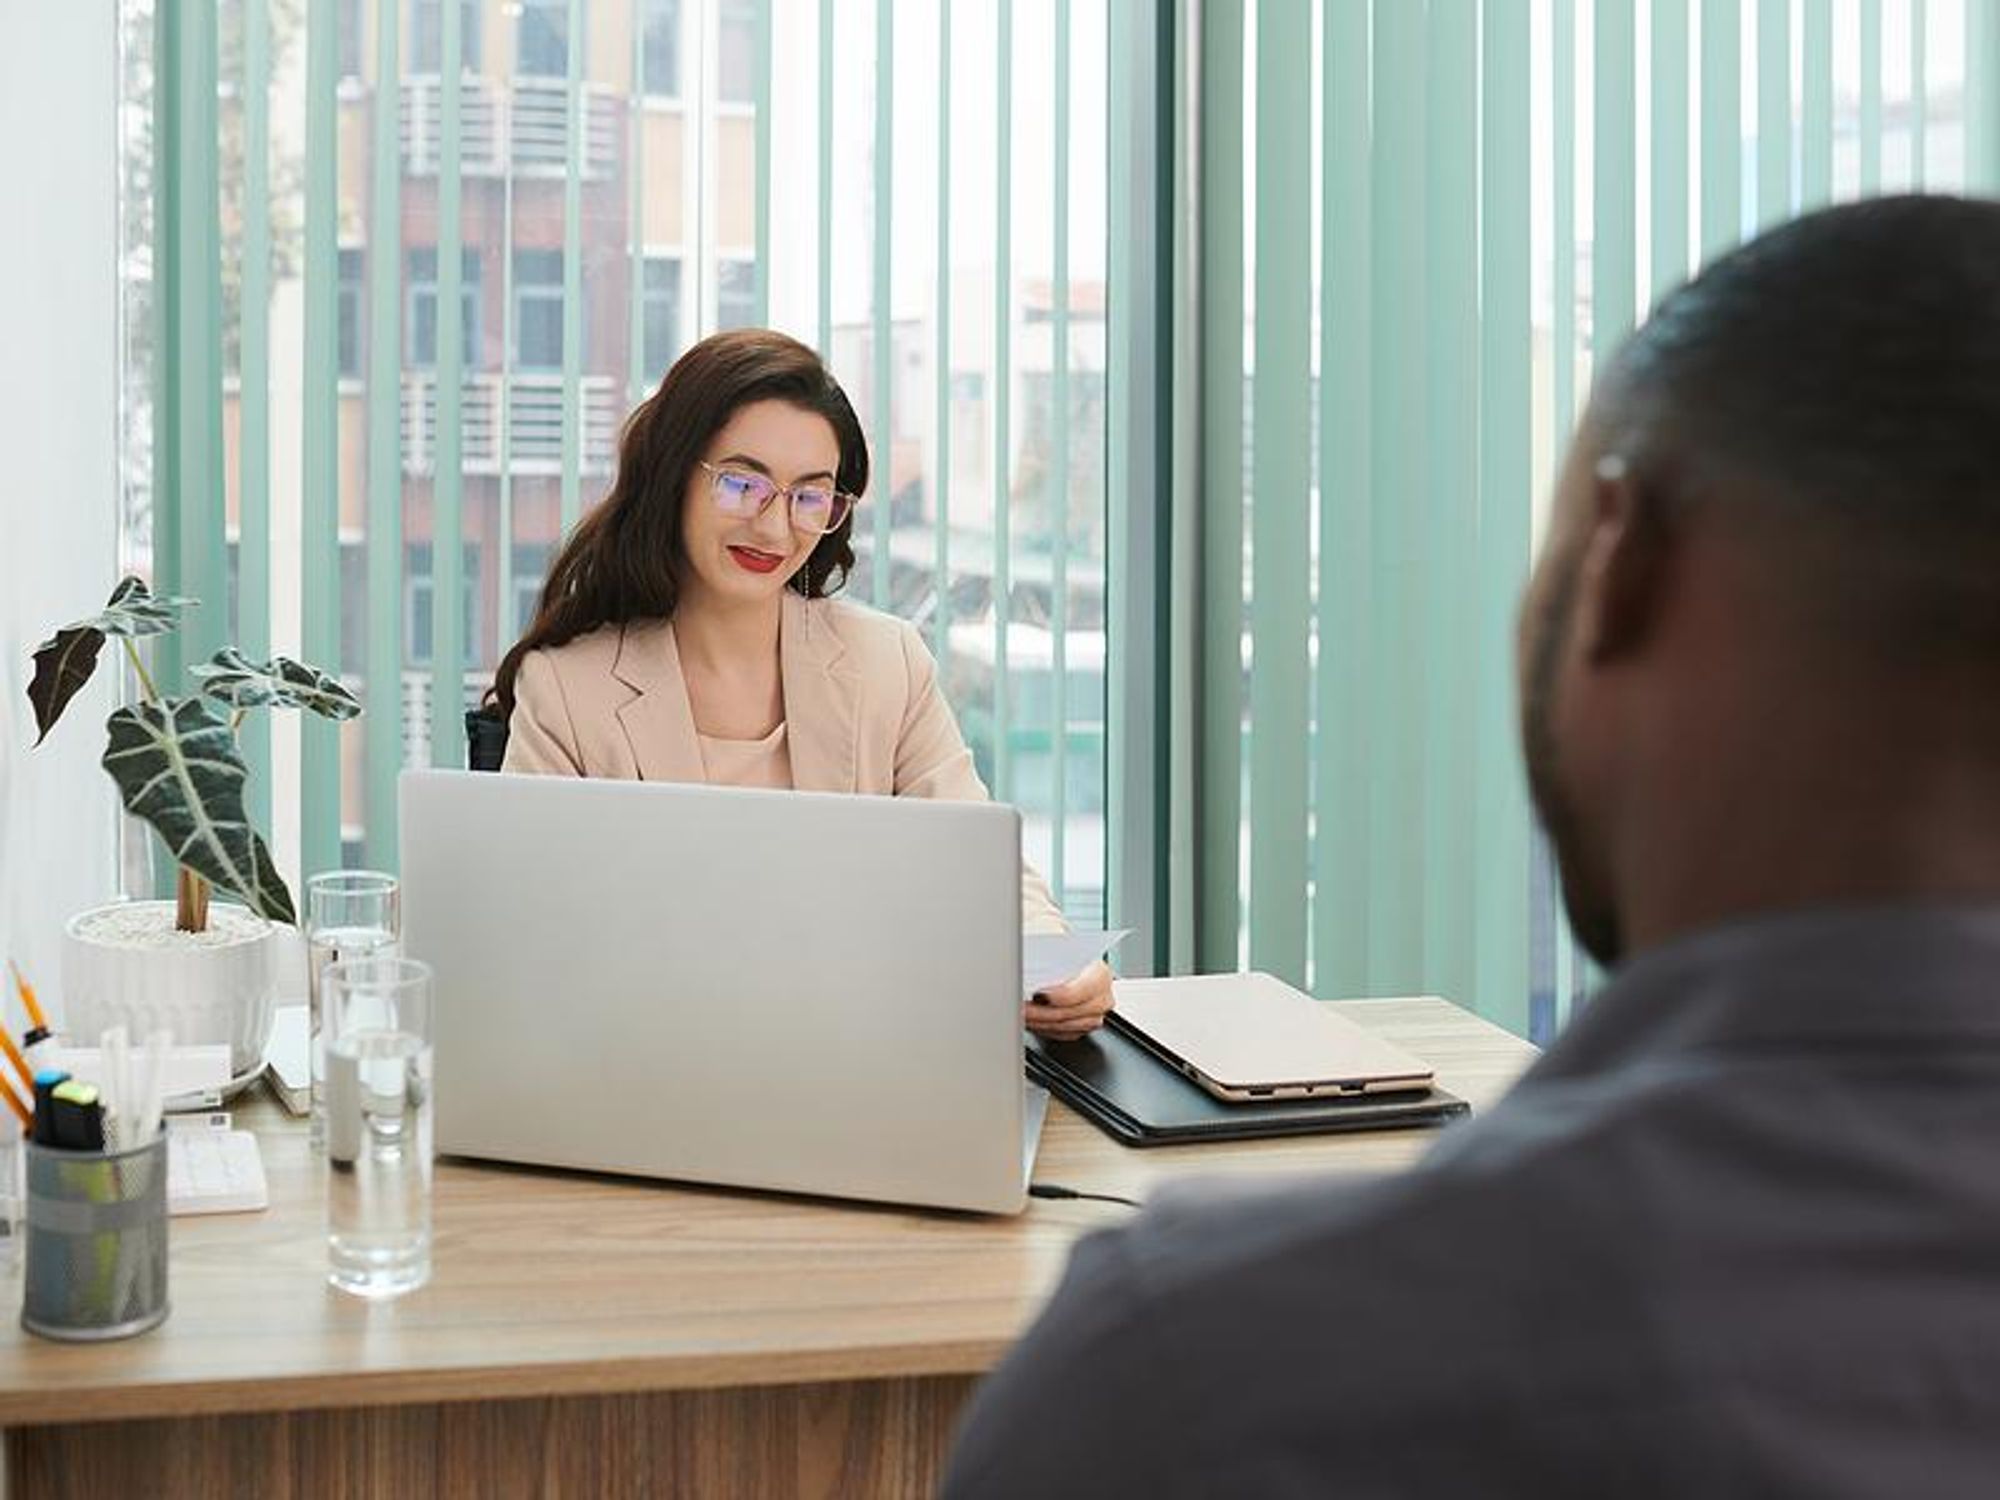 Hiring manager asks job candidate a tough interview question